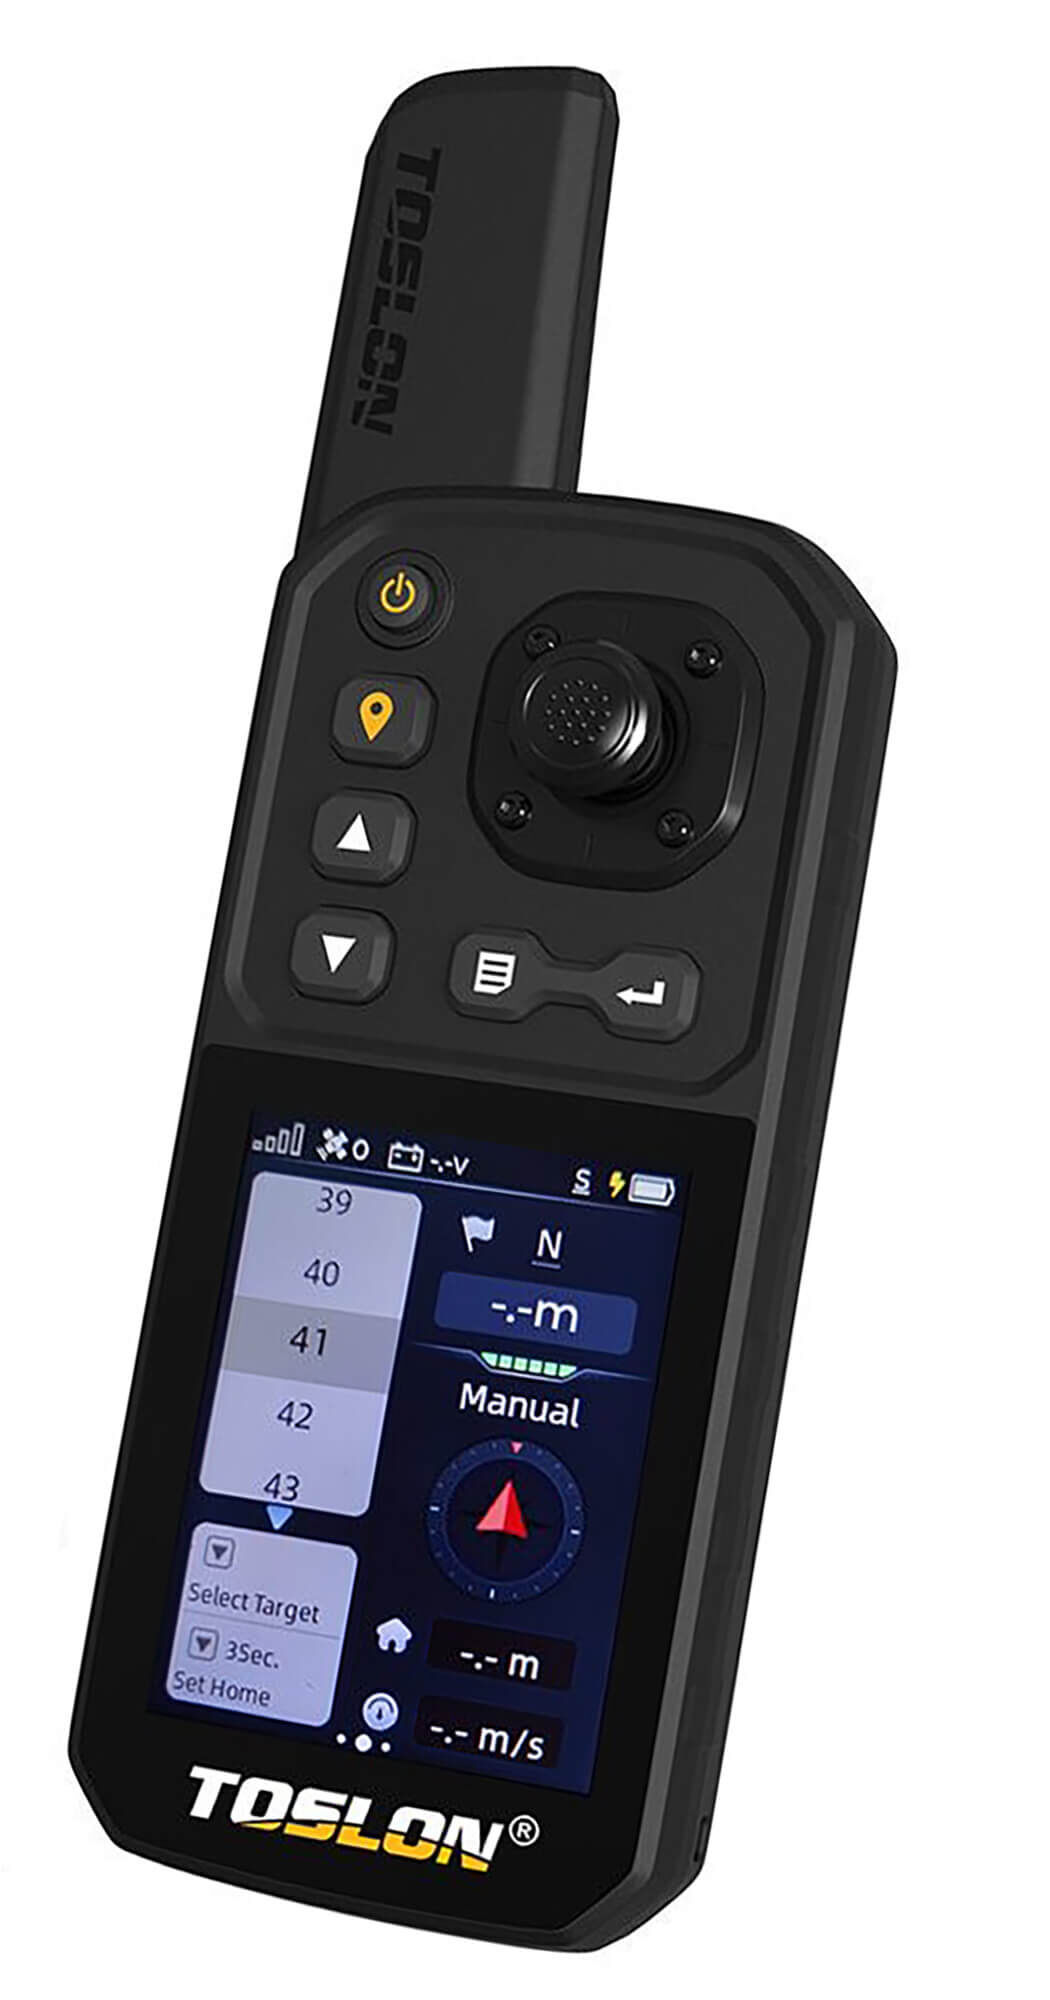 Toslon XR 310 Remote Control Autopilot GPS Kompass für Futterboote